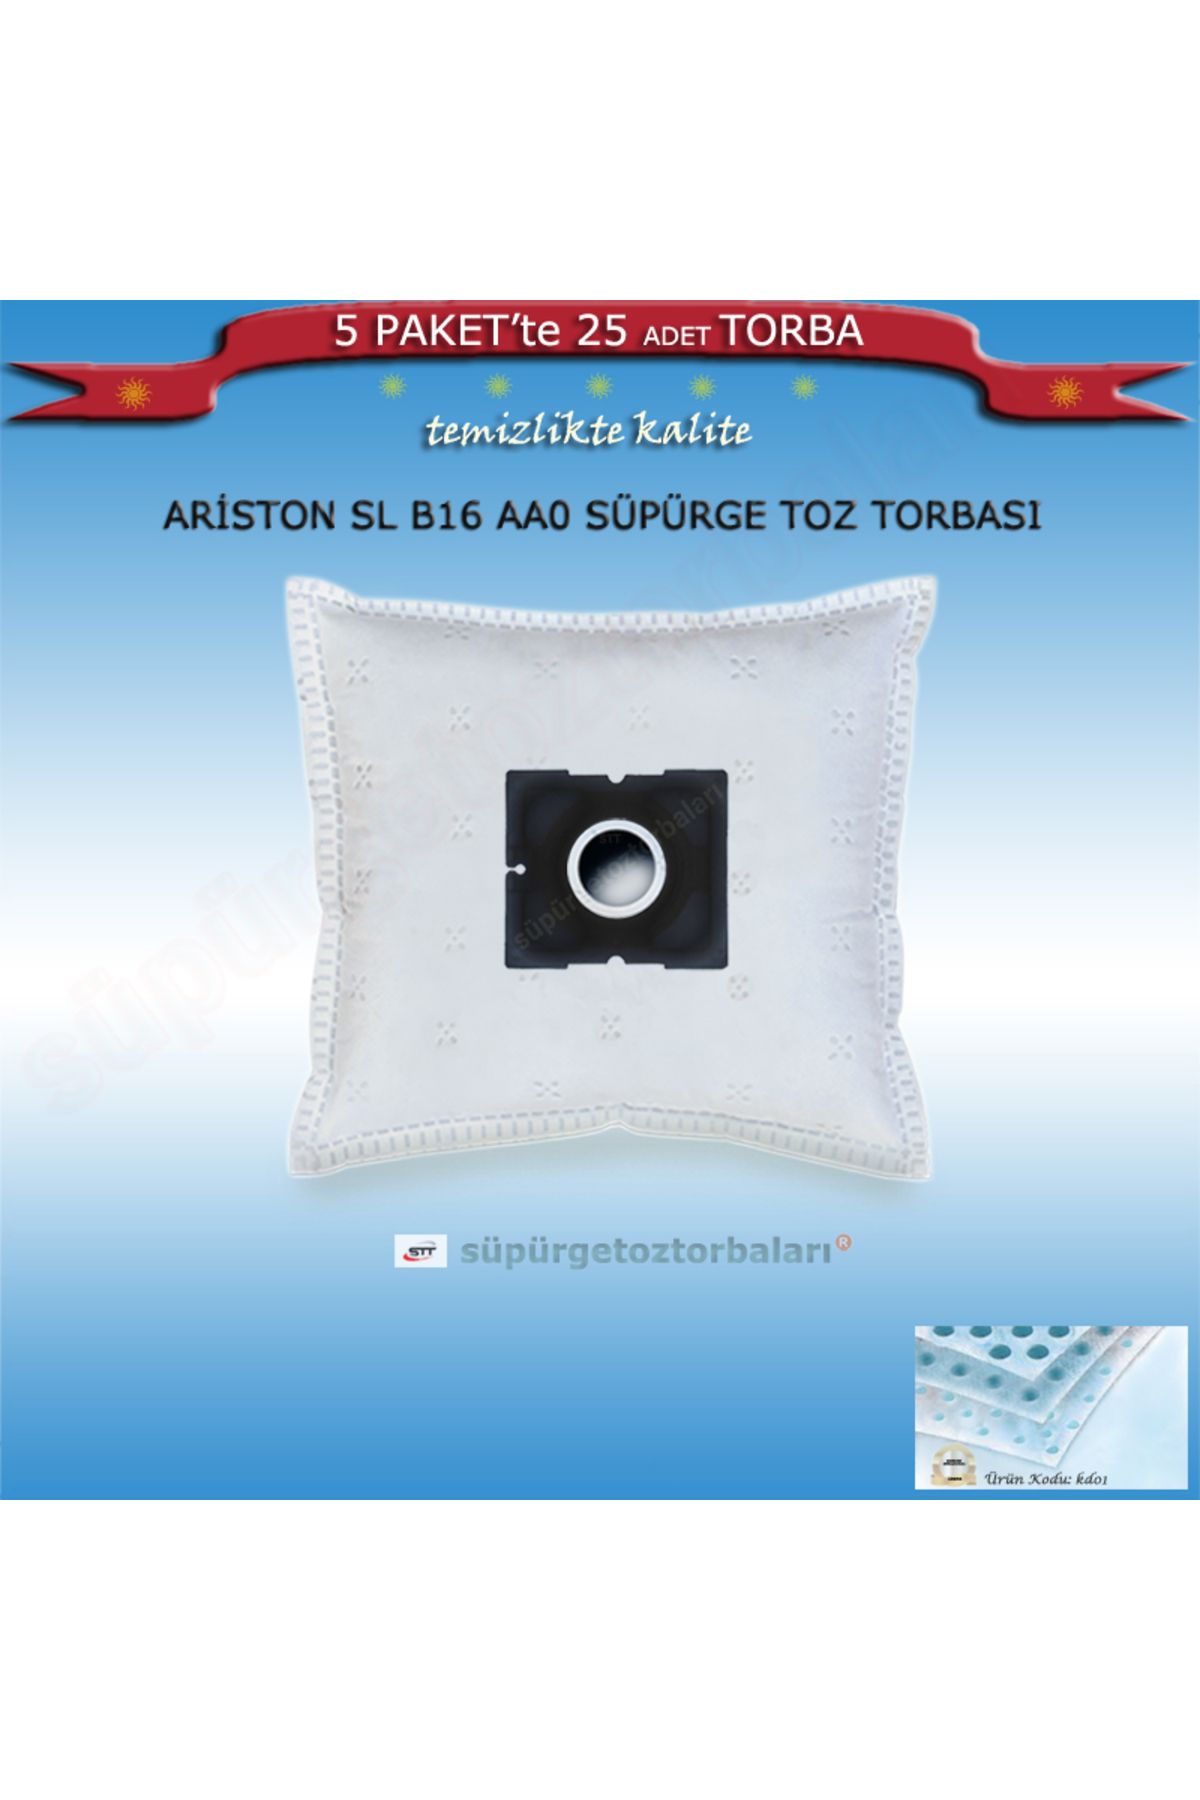 Ariston Sl B16 Aa0 Süpürge Toz Torbası 25 Adet Torba Kd01